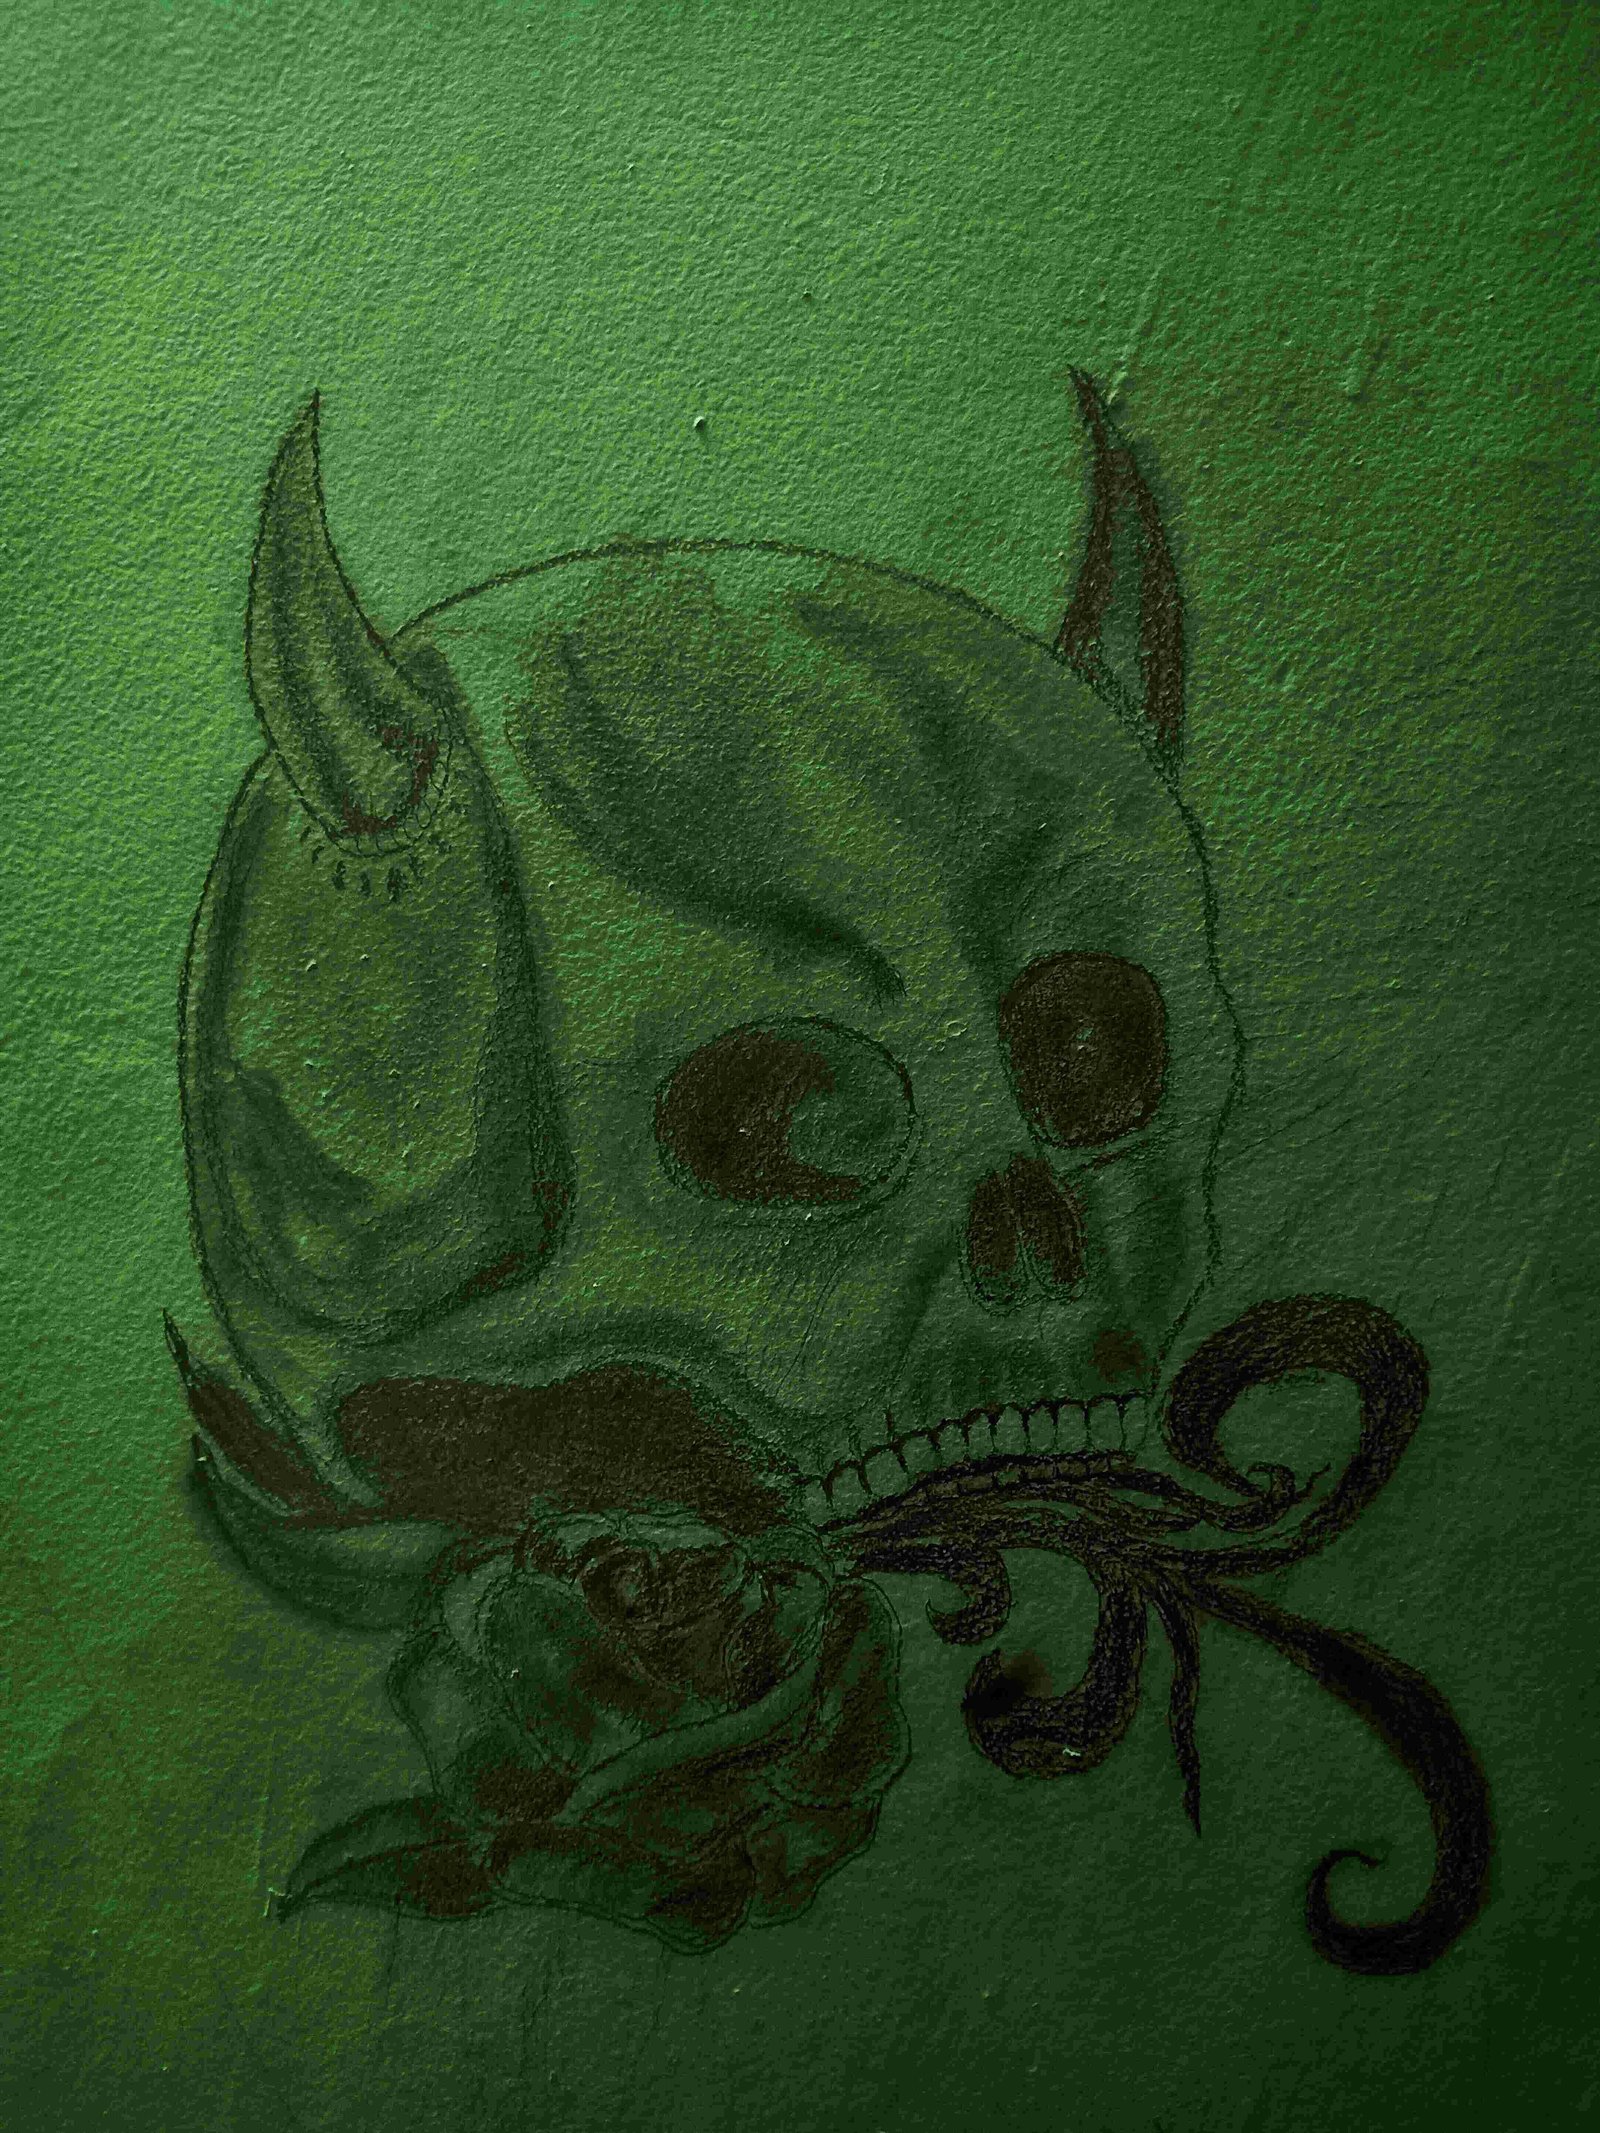 Halloween Wall Art Scary Halloween Drawing On Wall Using